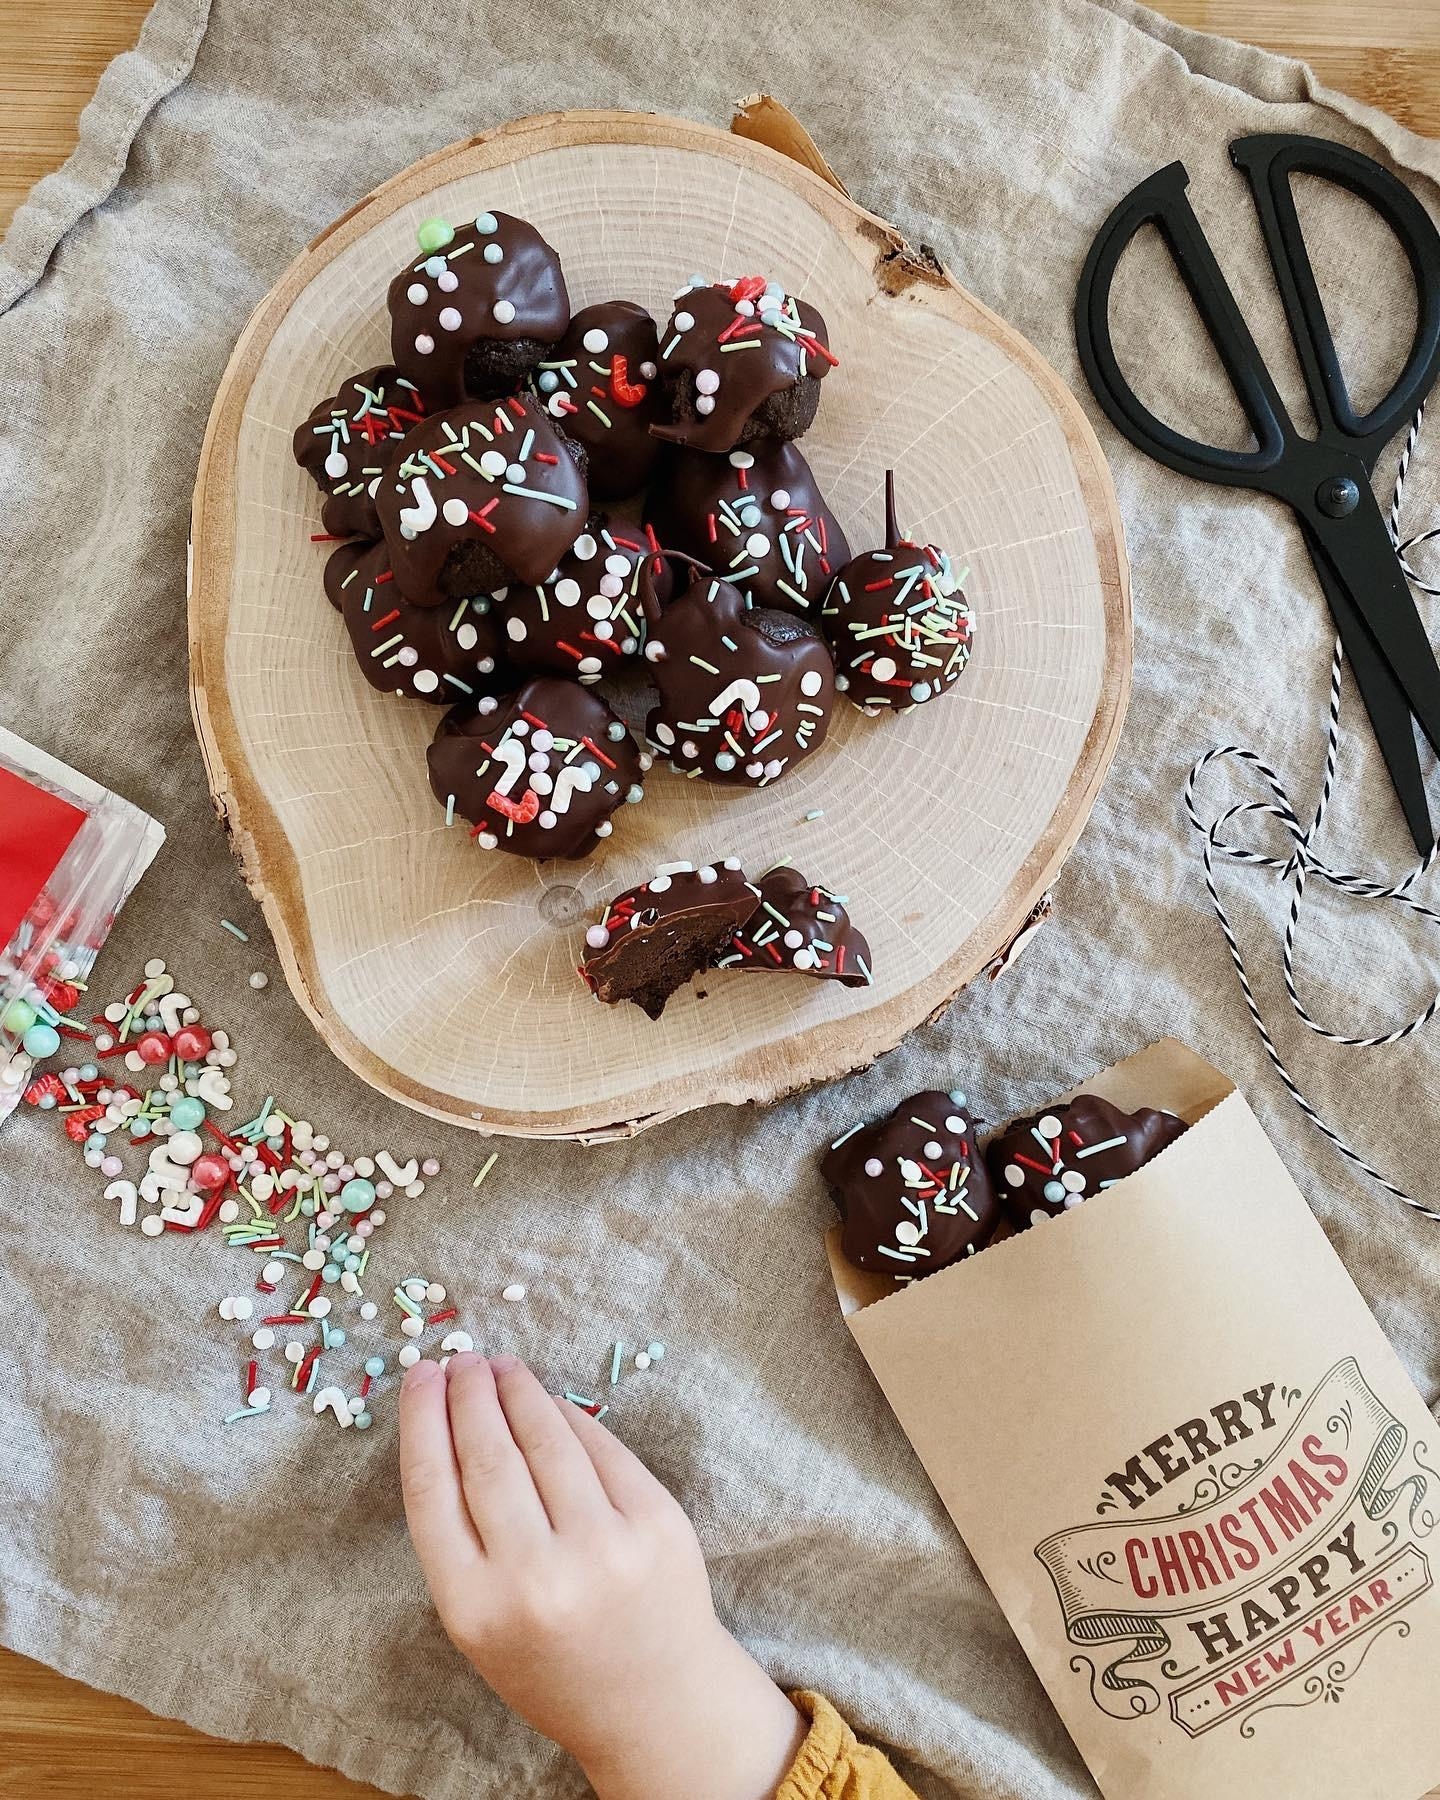 Nutella-Oreo-Truffles #geschenkeausderküche #selbstgemacht #backenmitkindern